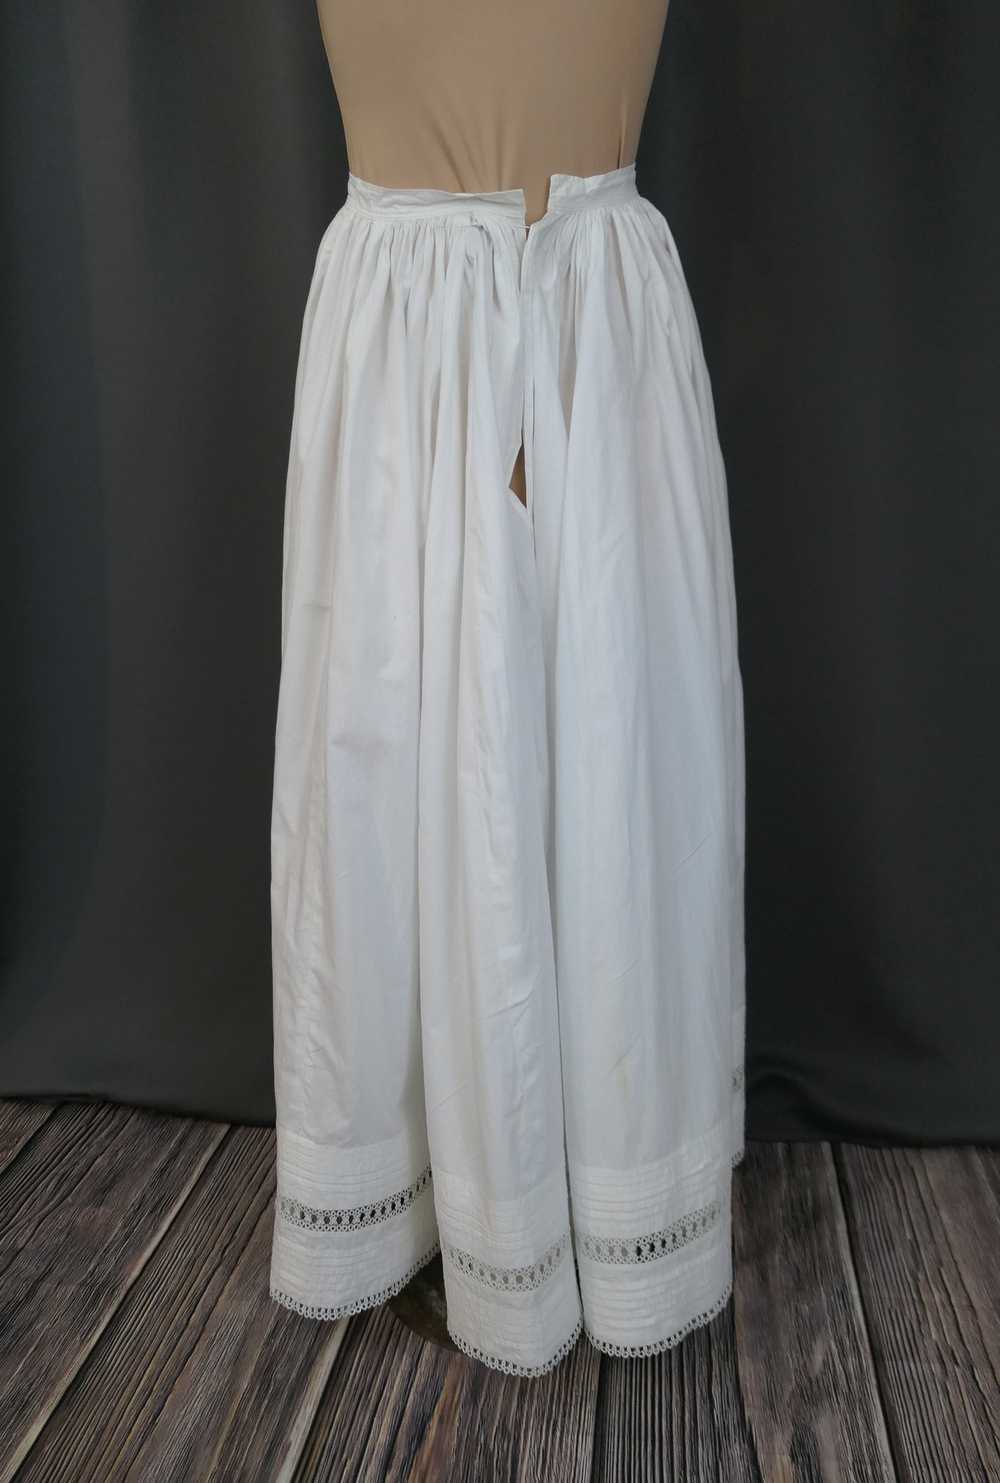 Edwardian 1900s White Cotton Petticoat with Tatte… - image 8